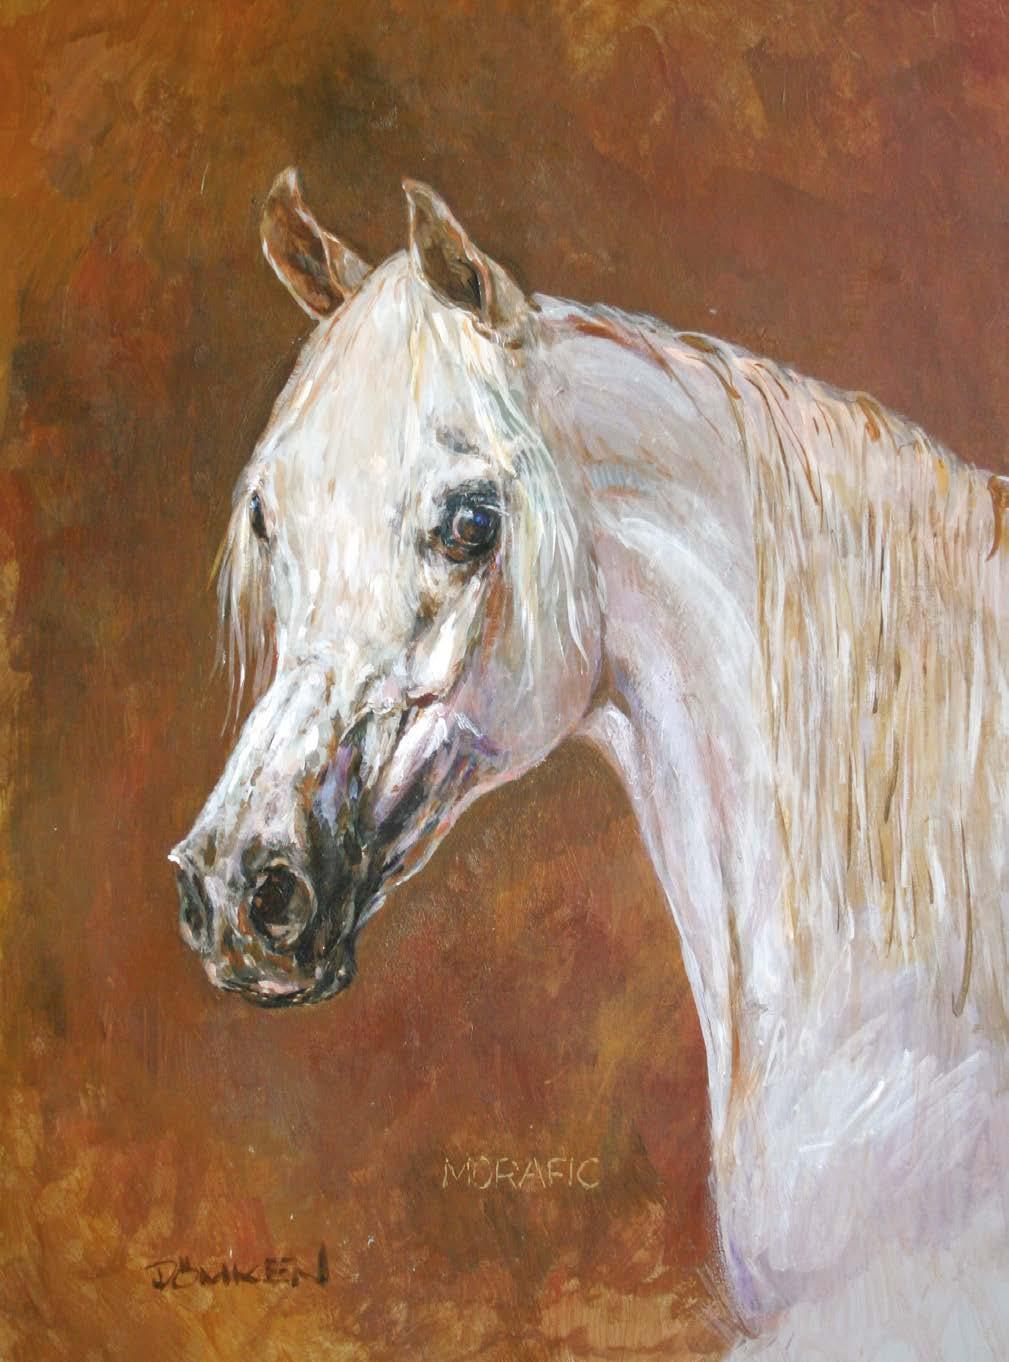 Original acryl painting of the stallion Morafic.